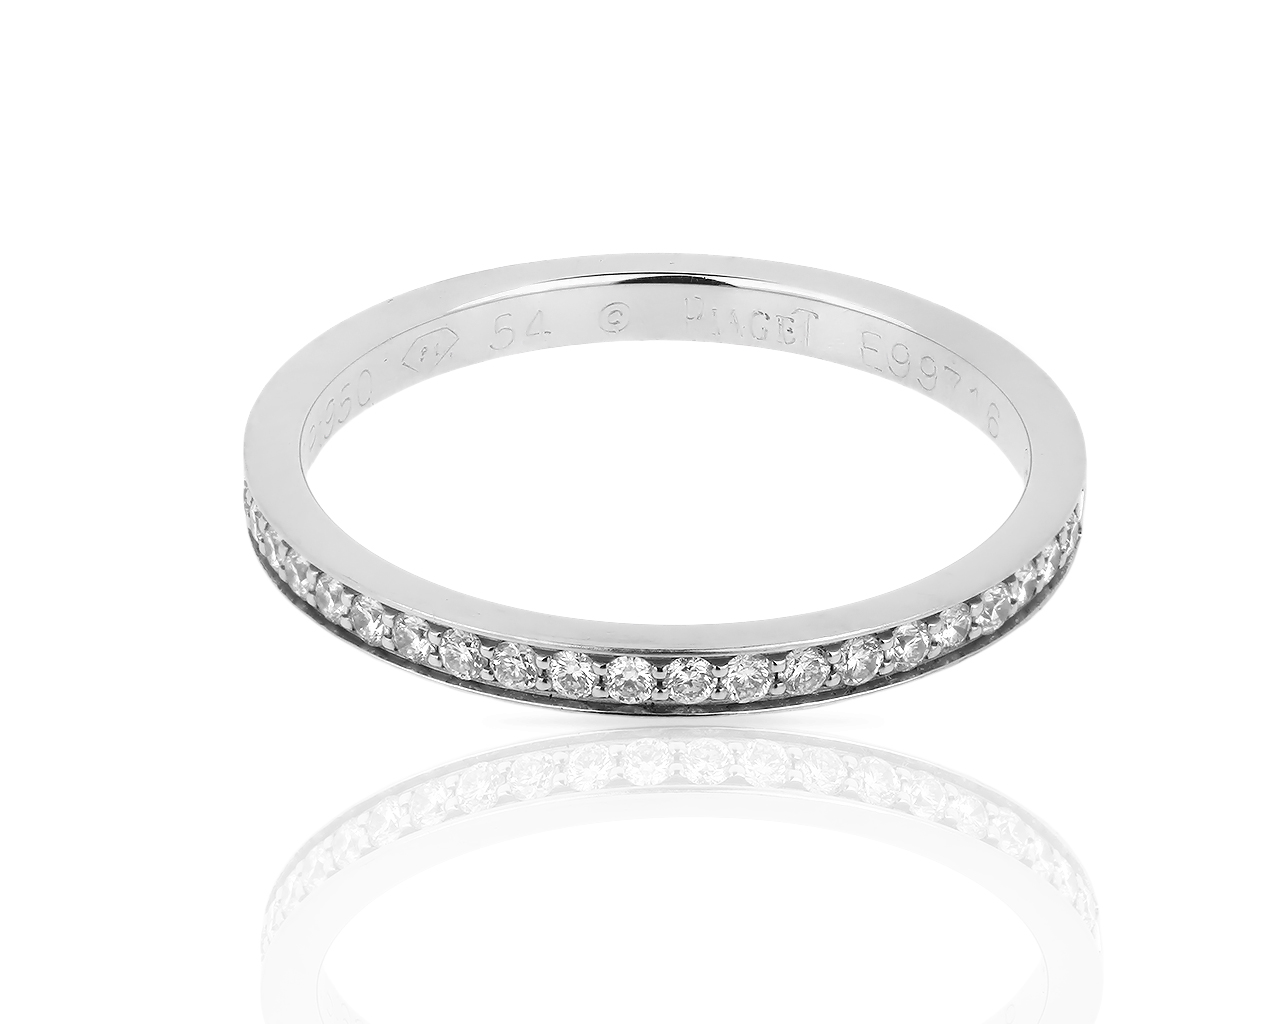 Платиновое кольцо с бриллиантами 0.19ct Piaget